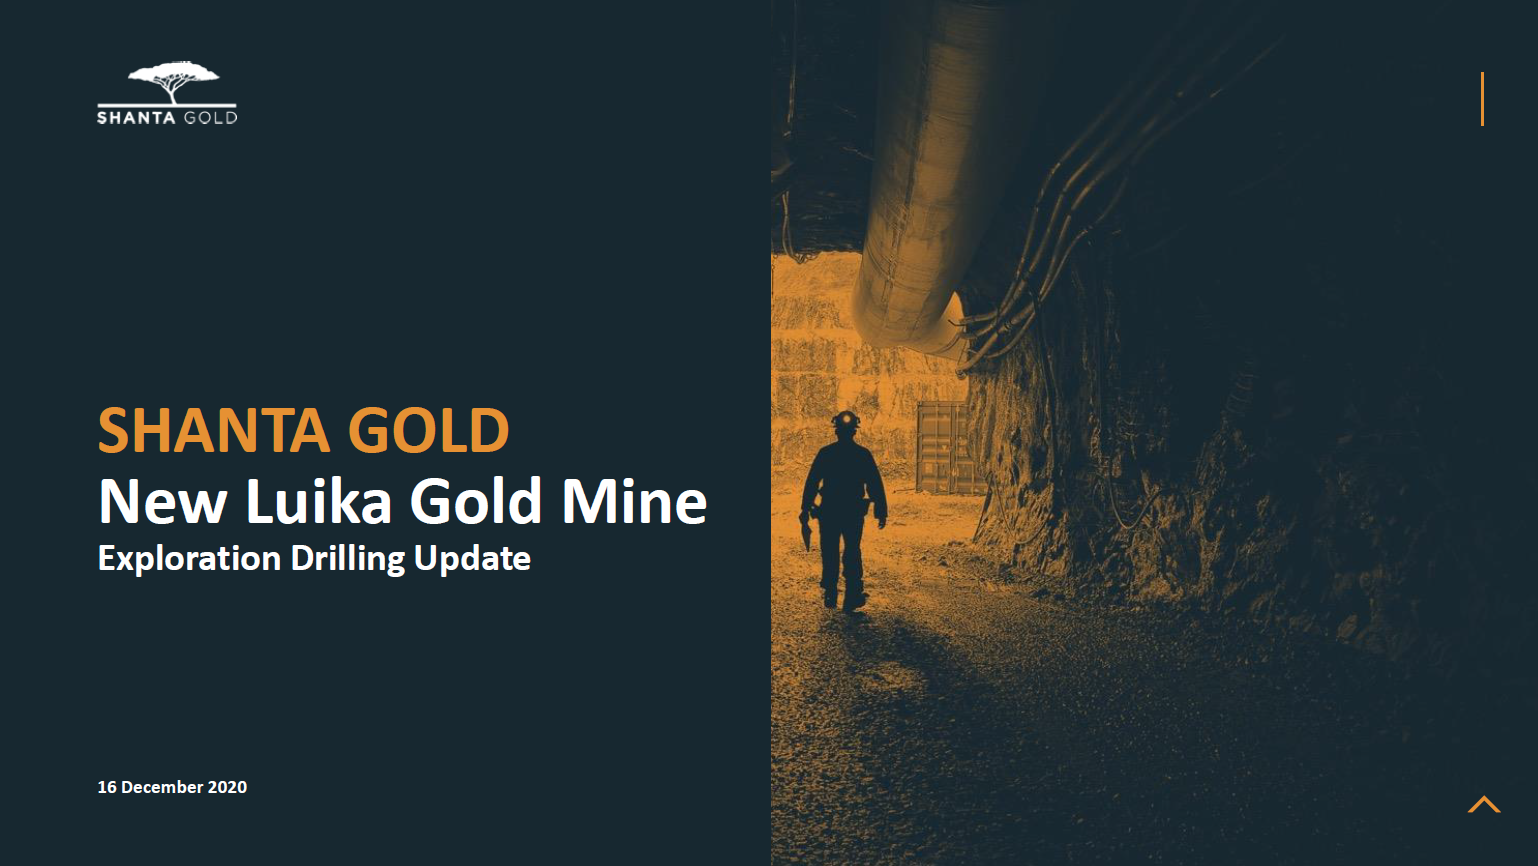 New Luika Gold Mine Exploration Drilling Update Presentation